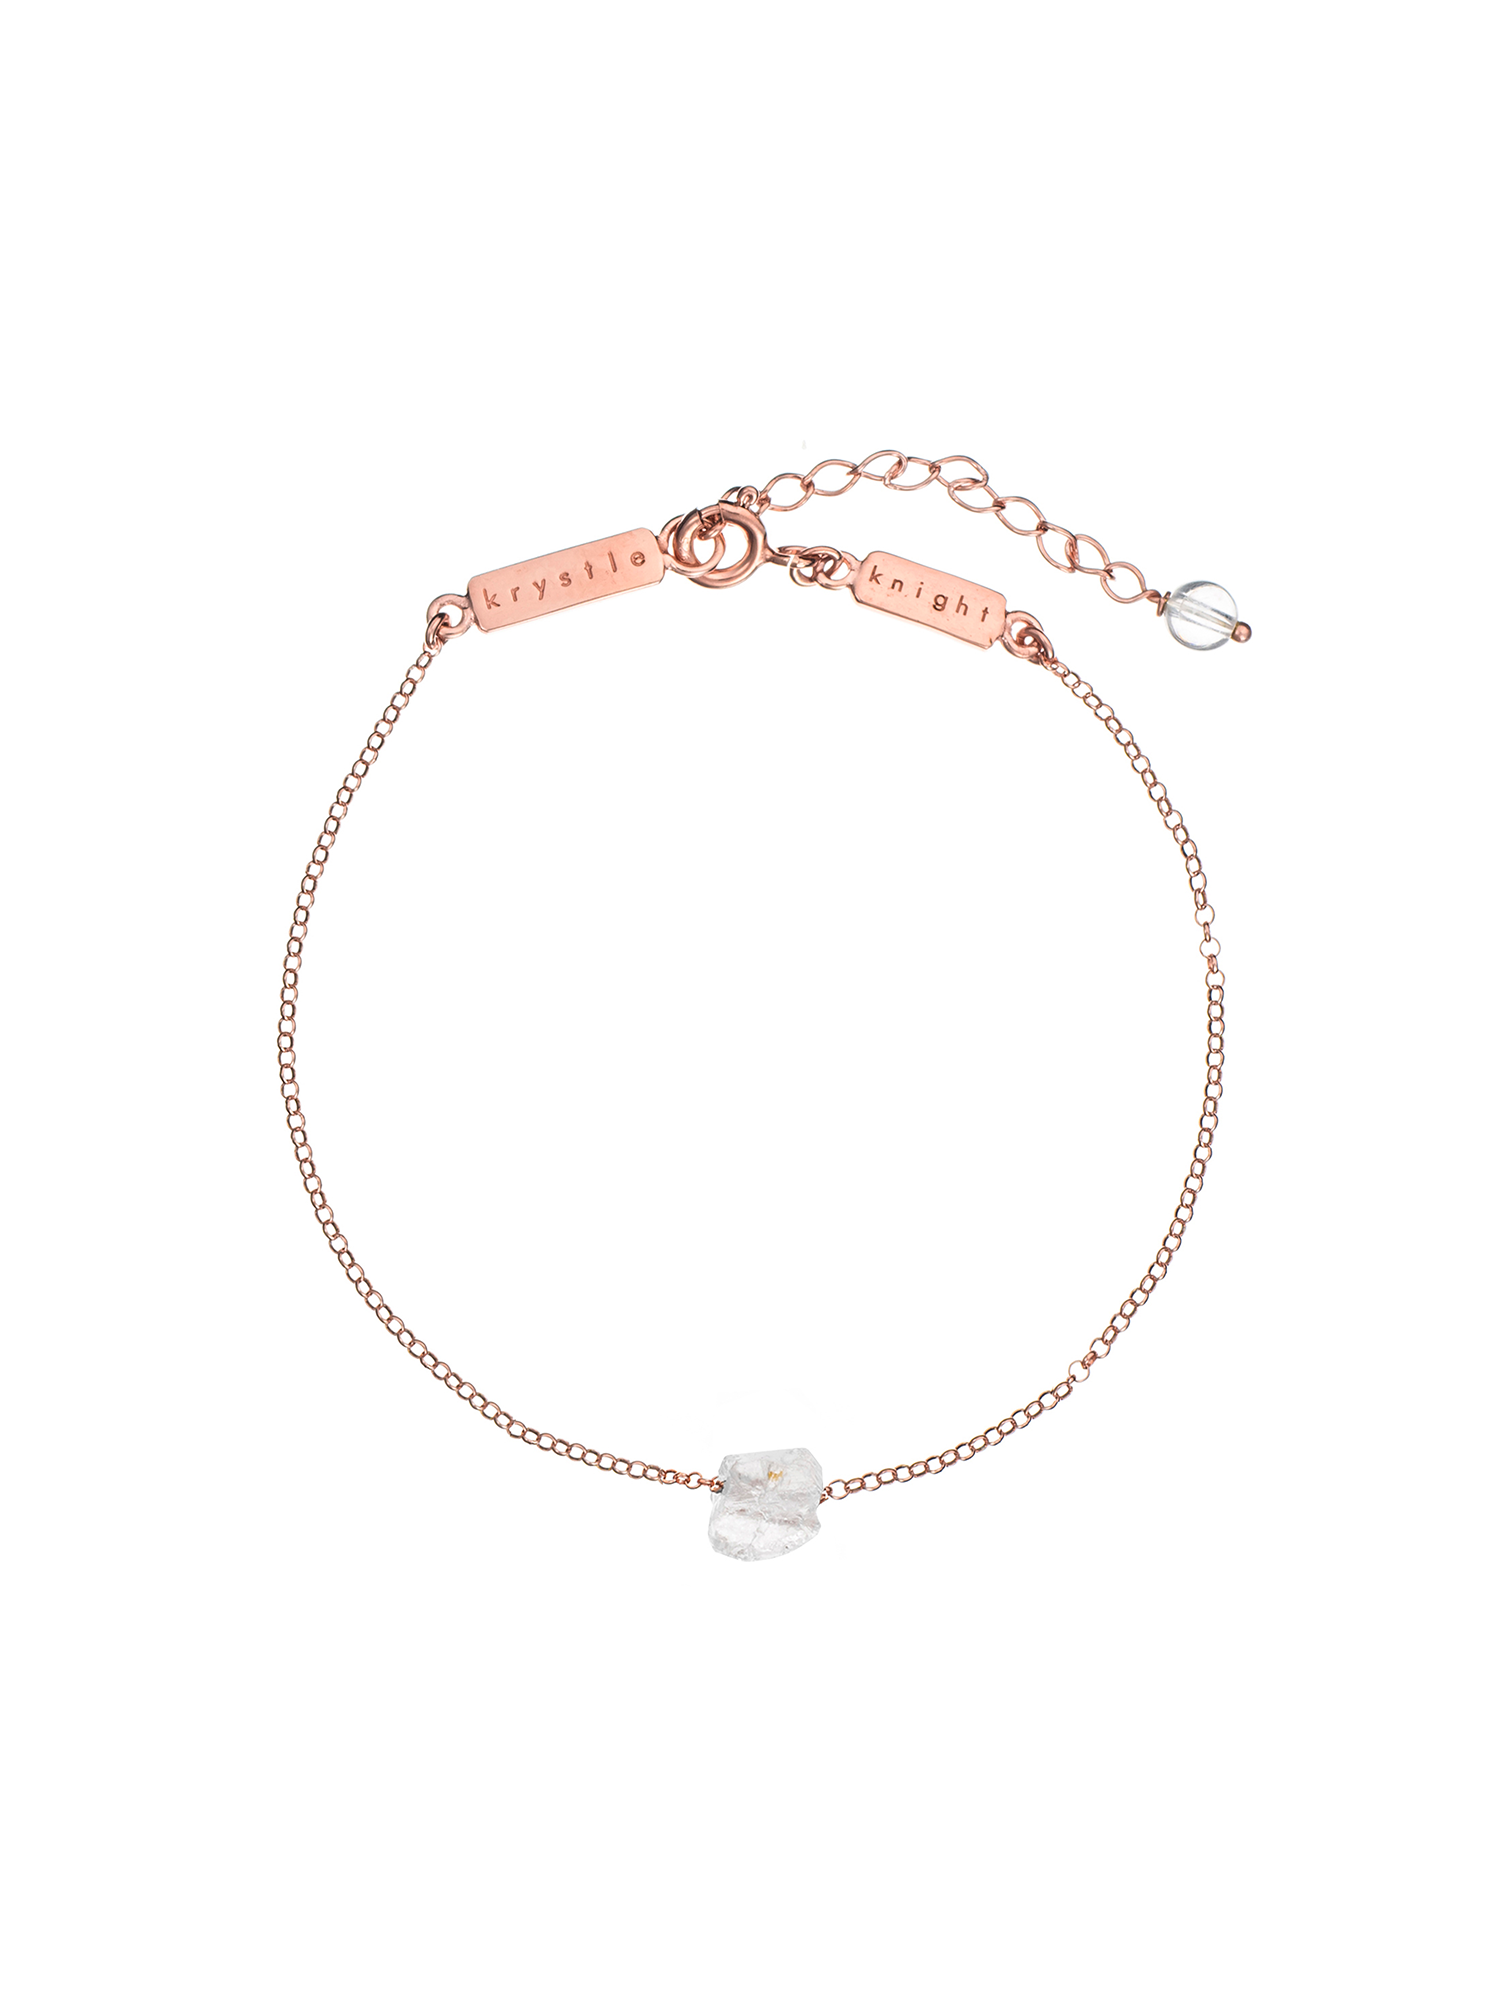 raw energy bracelet | clear quartz